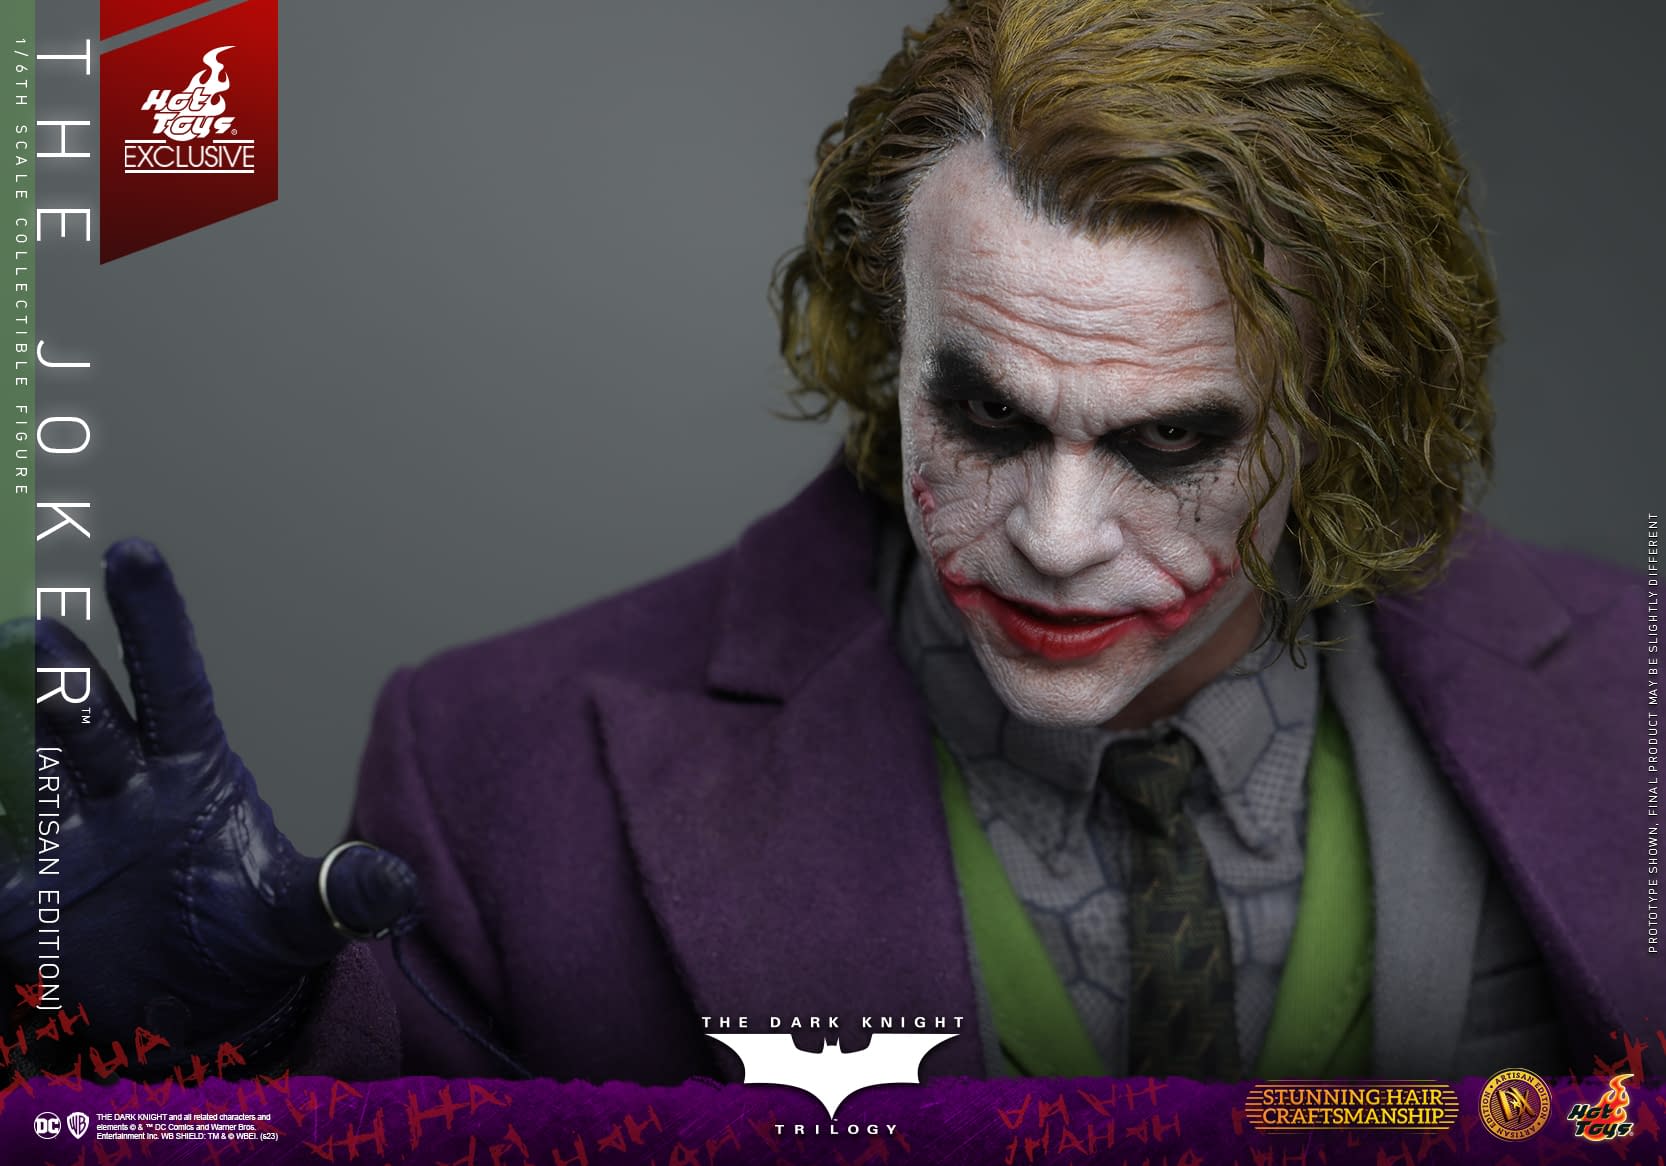 Hot Toys Announces 1/6 Scale Artisan The Dark Knight The Joker